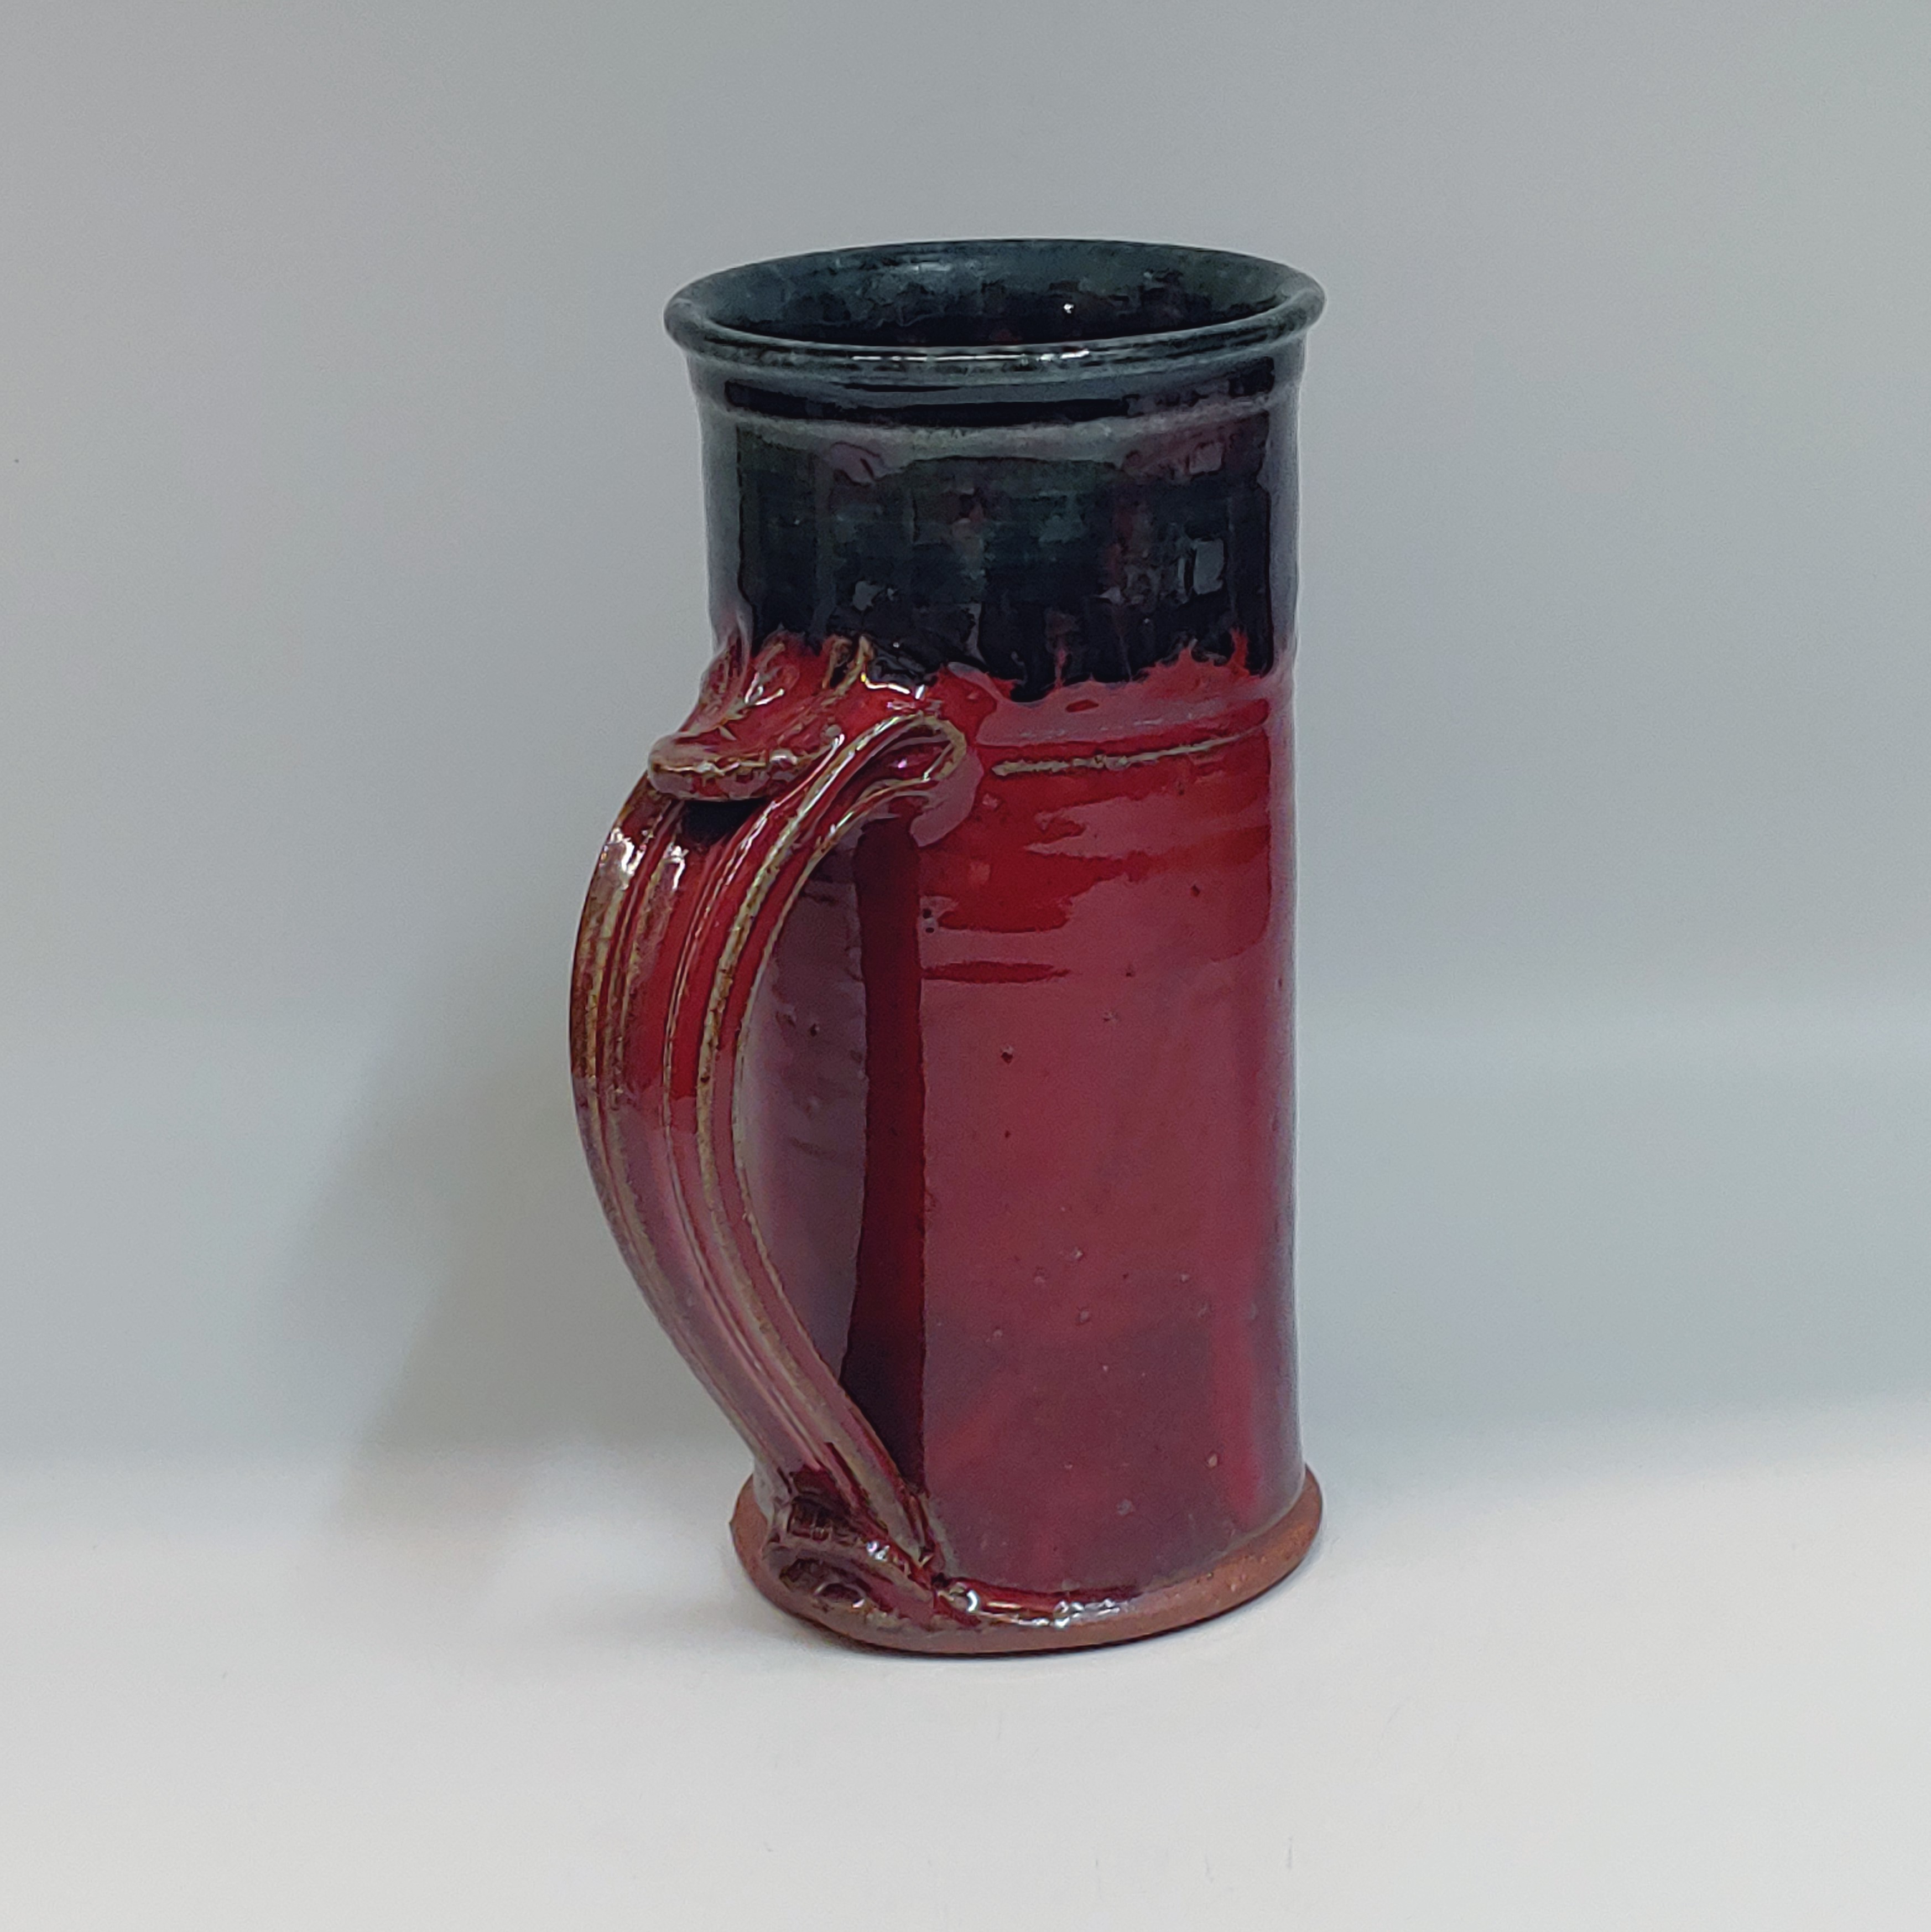 #220242 Mug, Beer Stein, Red/Black $22 at Hunter Wolff Gallery